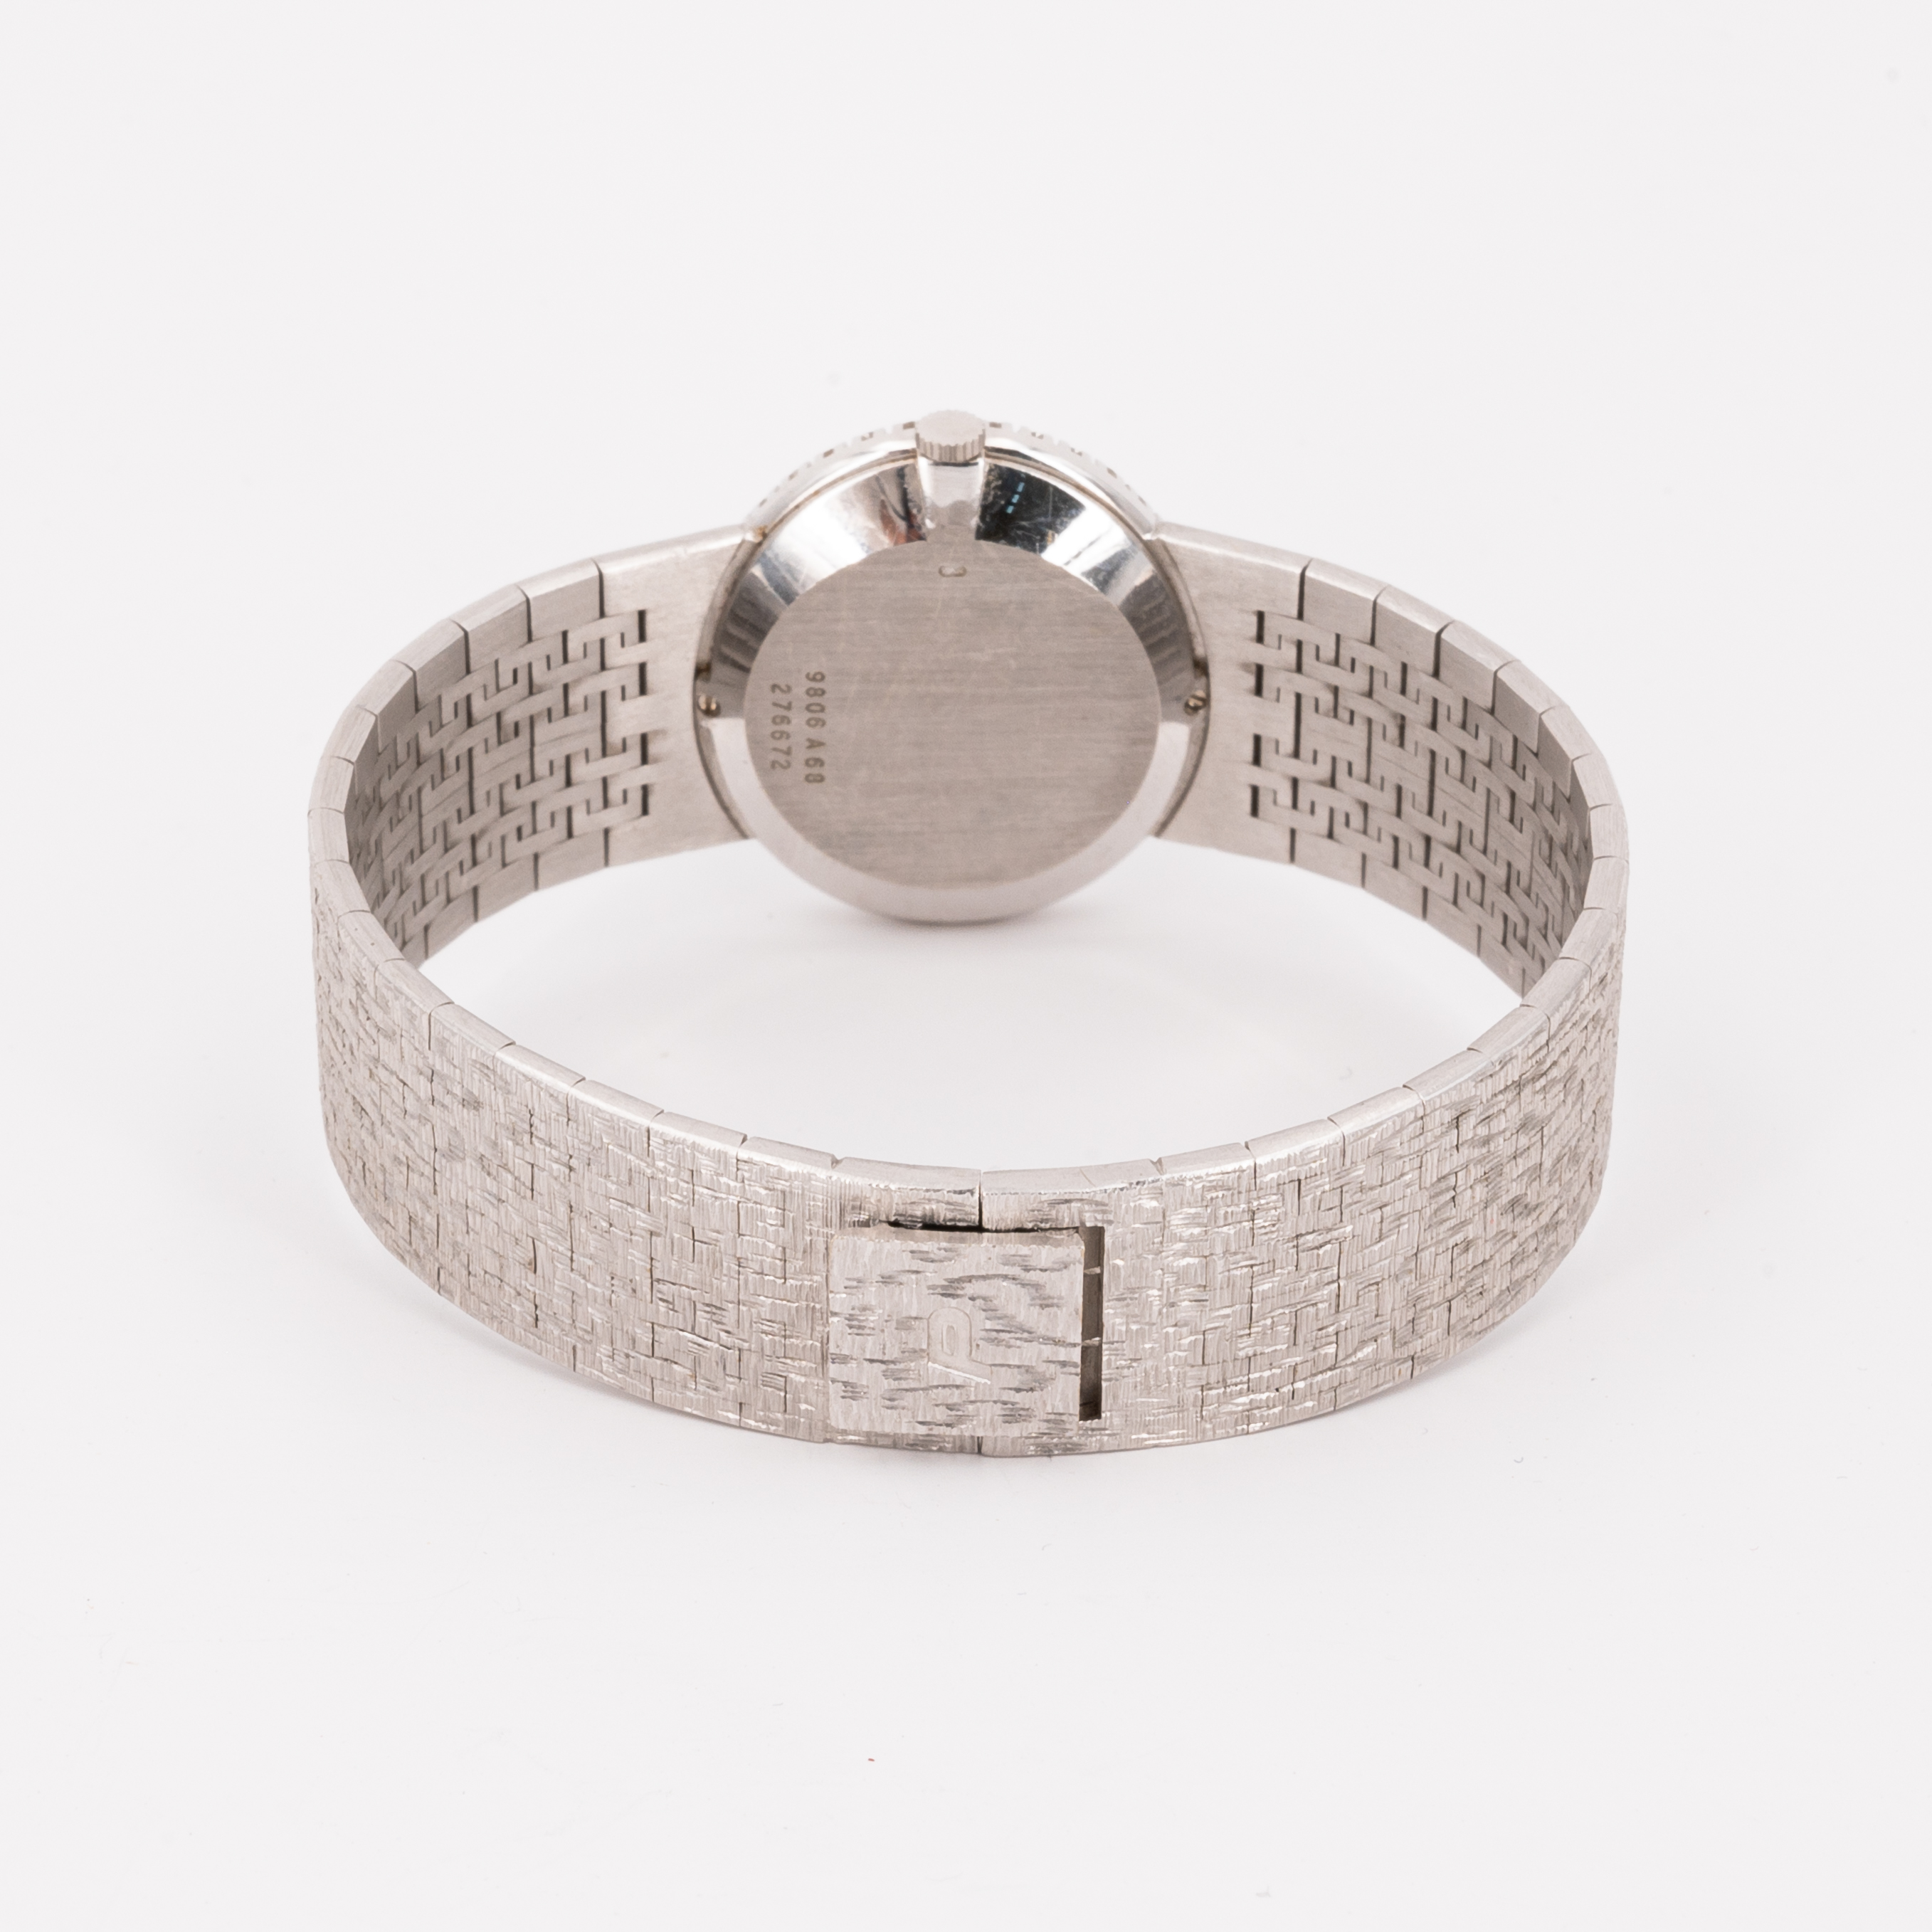 Piaget: Jewel Watch - Image 4 of 8